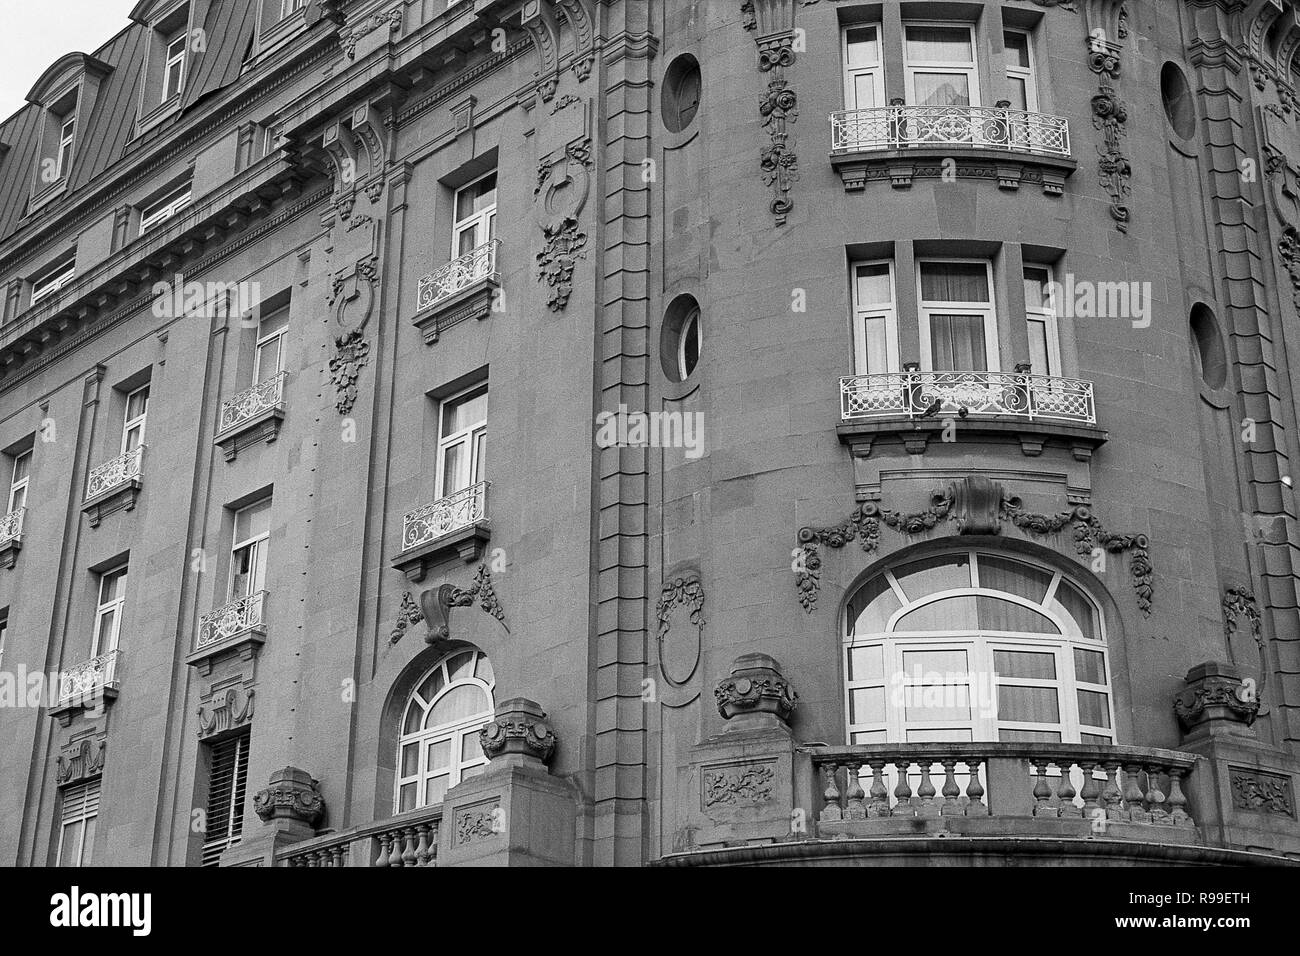 MONTERREY, NL/MEXICO - NOV 10, 2003: Facade detail of the Ancira hotel (built 1909), at the Macroplaza Stock Photo